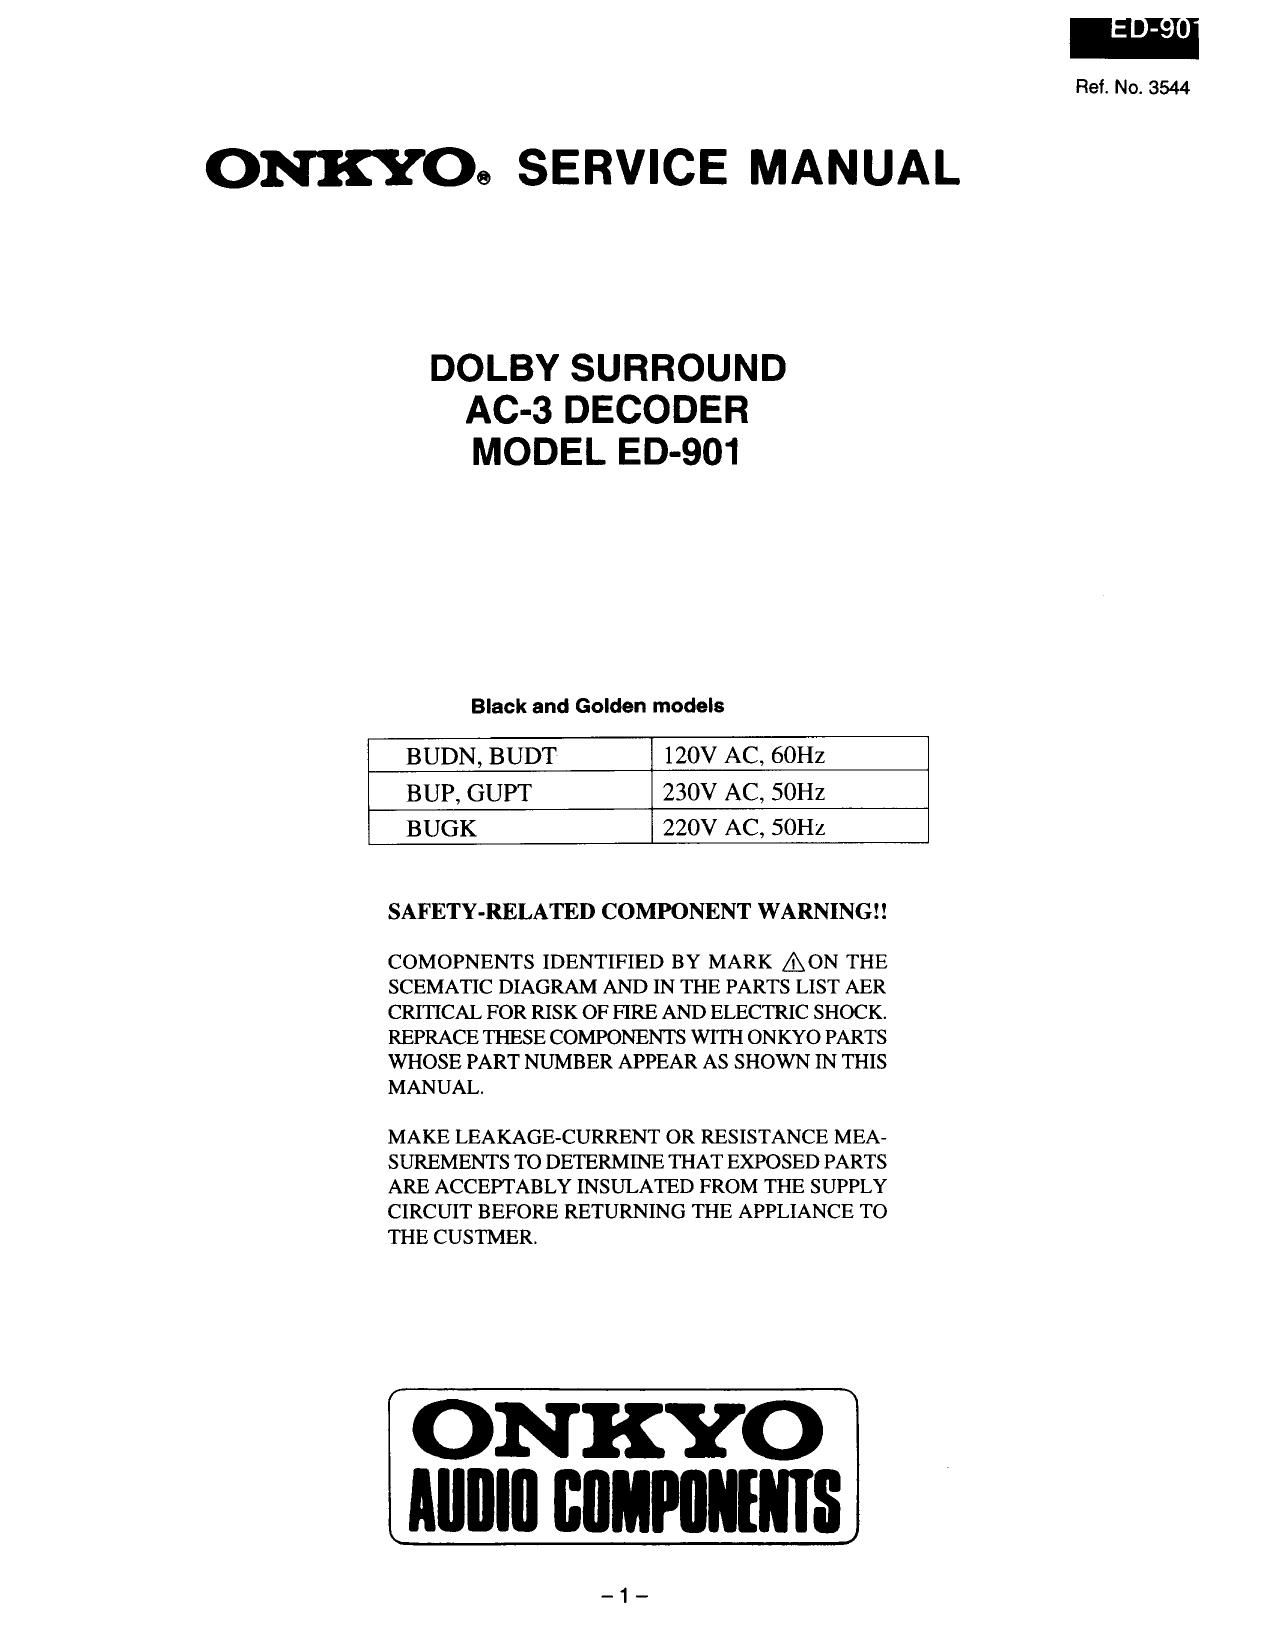 Onkyo ED 901 Service Manual